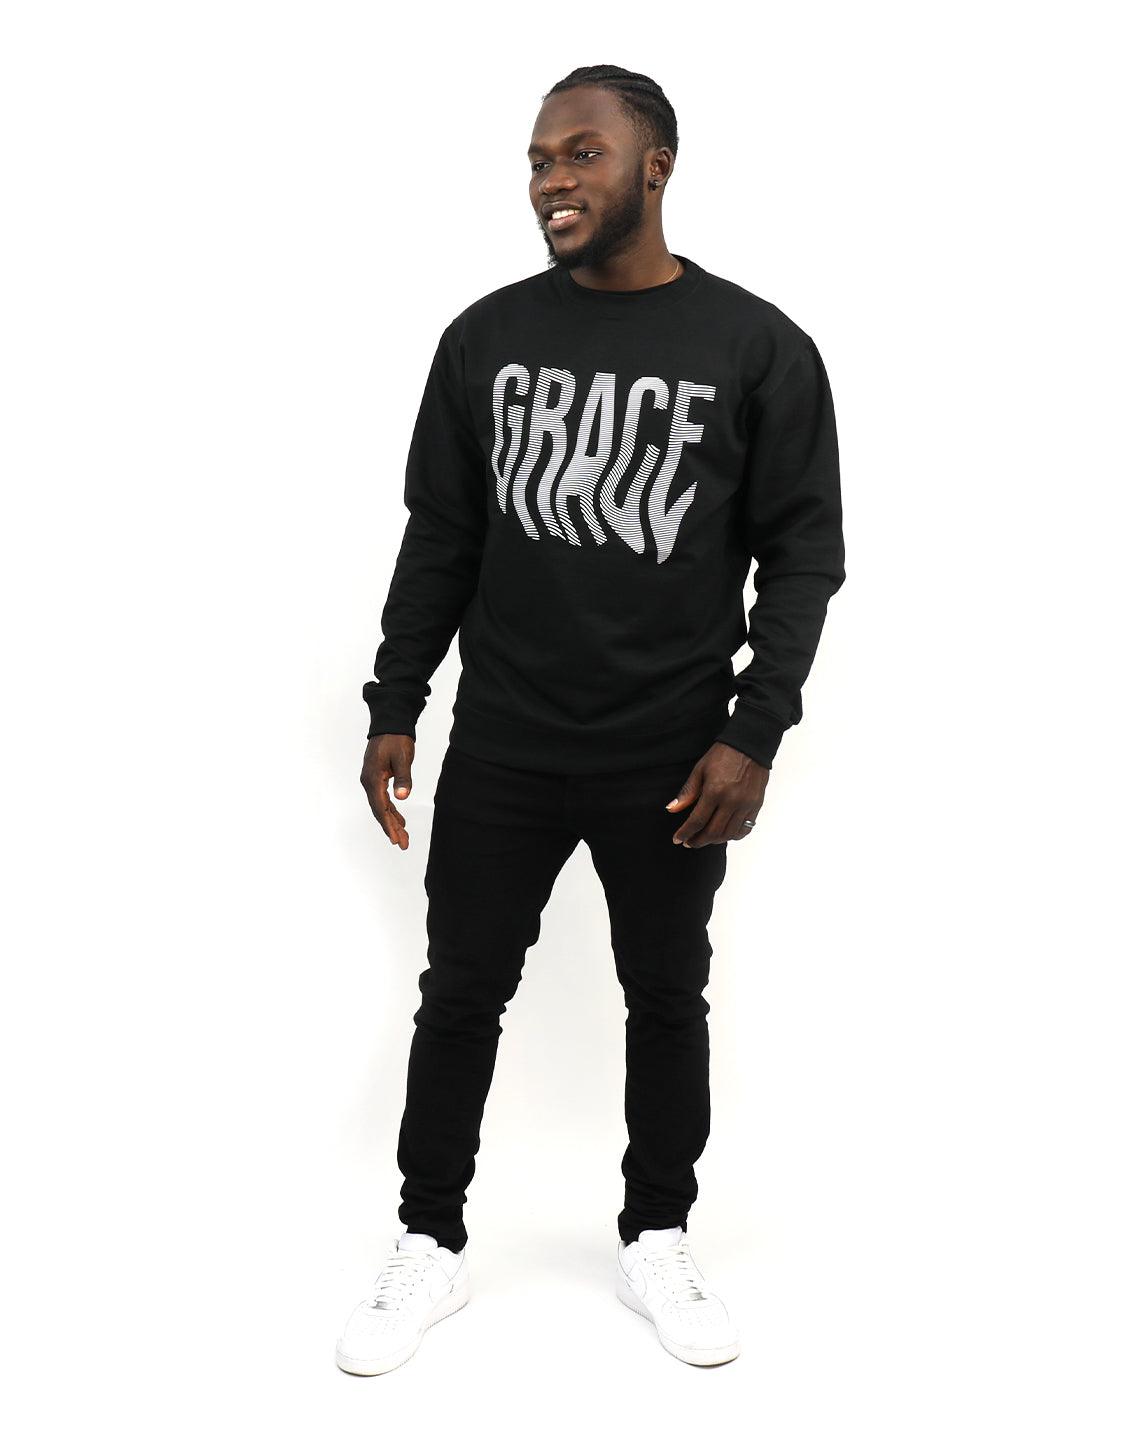 Grace Sweatshirt - Black - VOTC Clothing